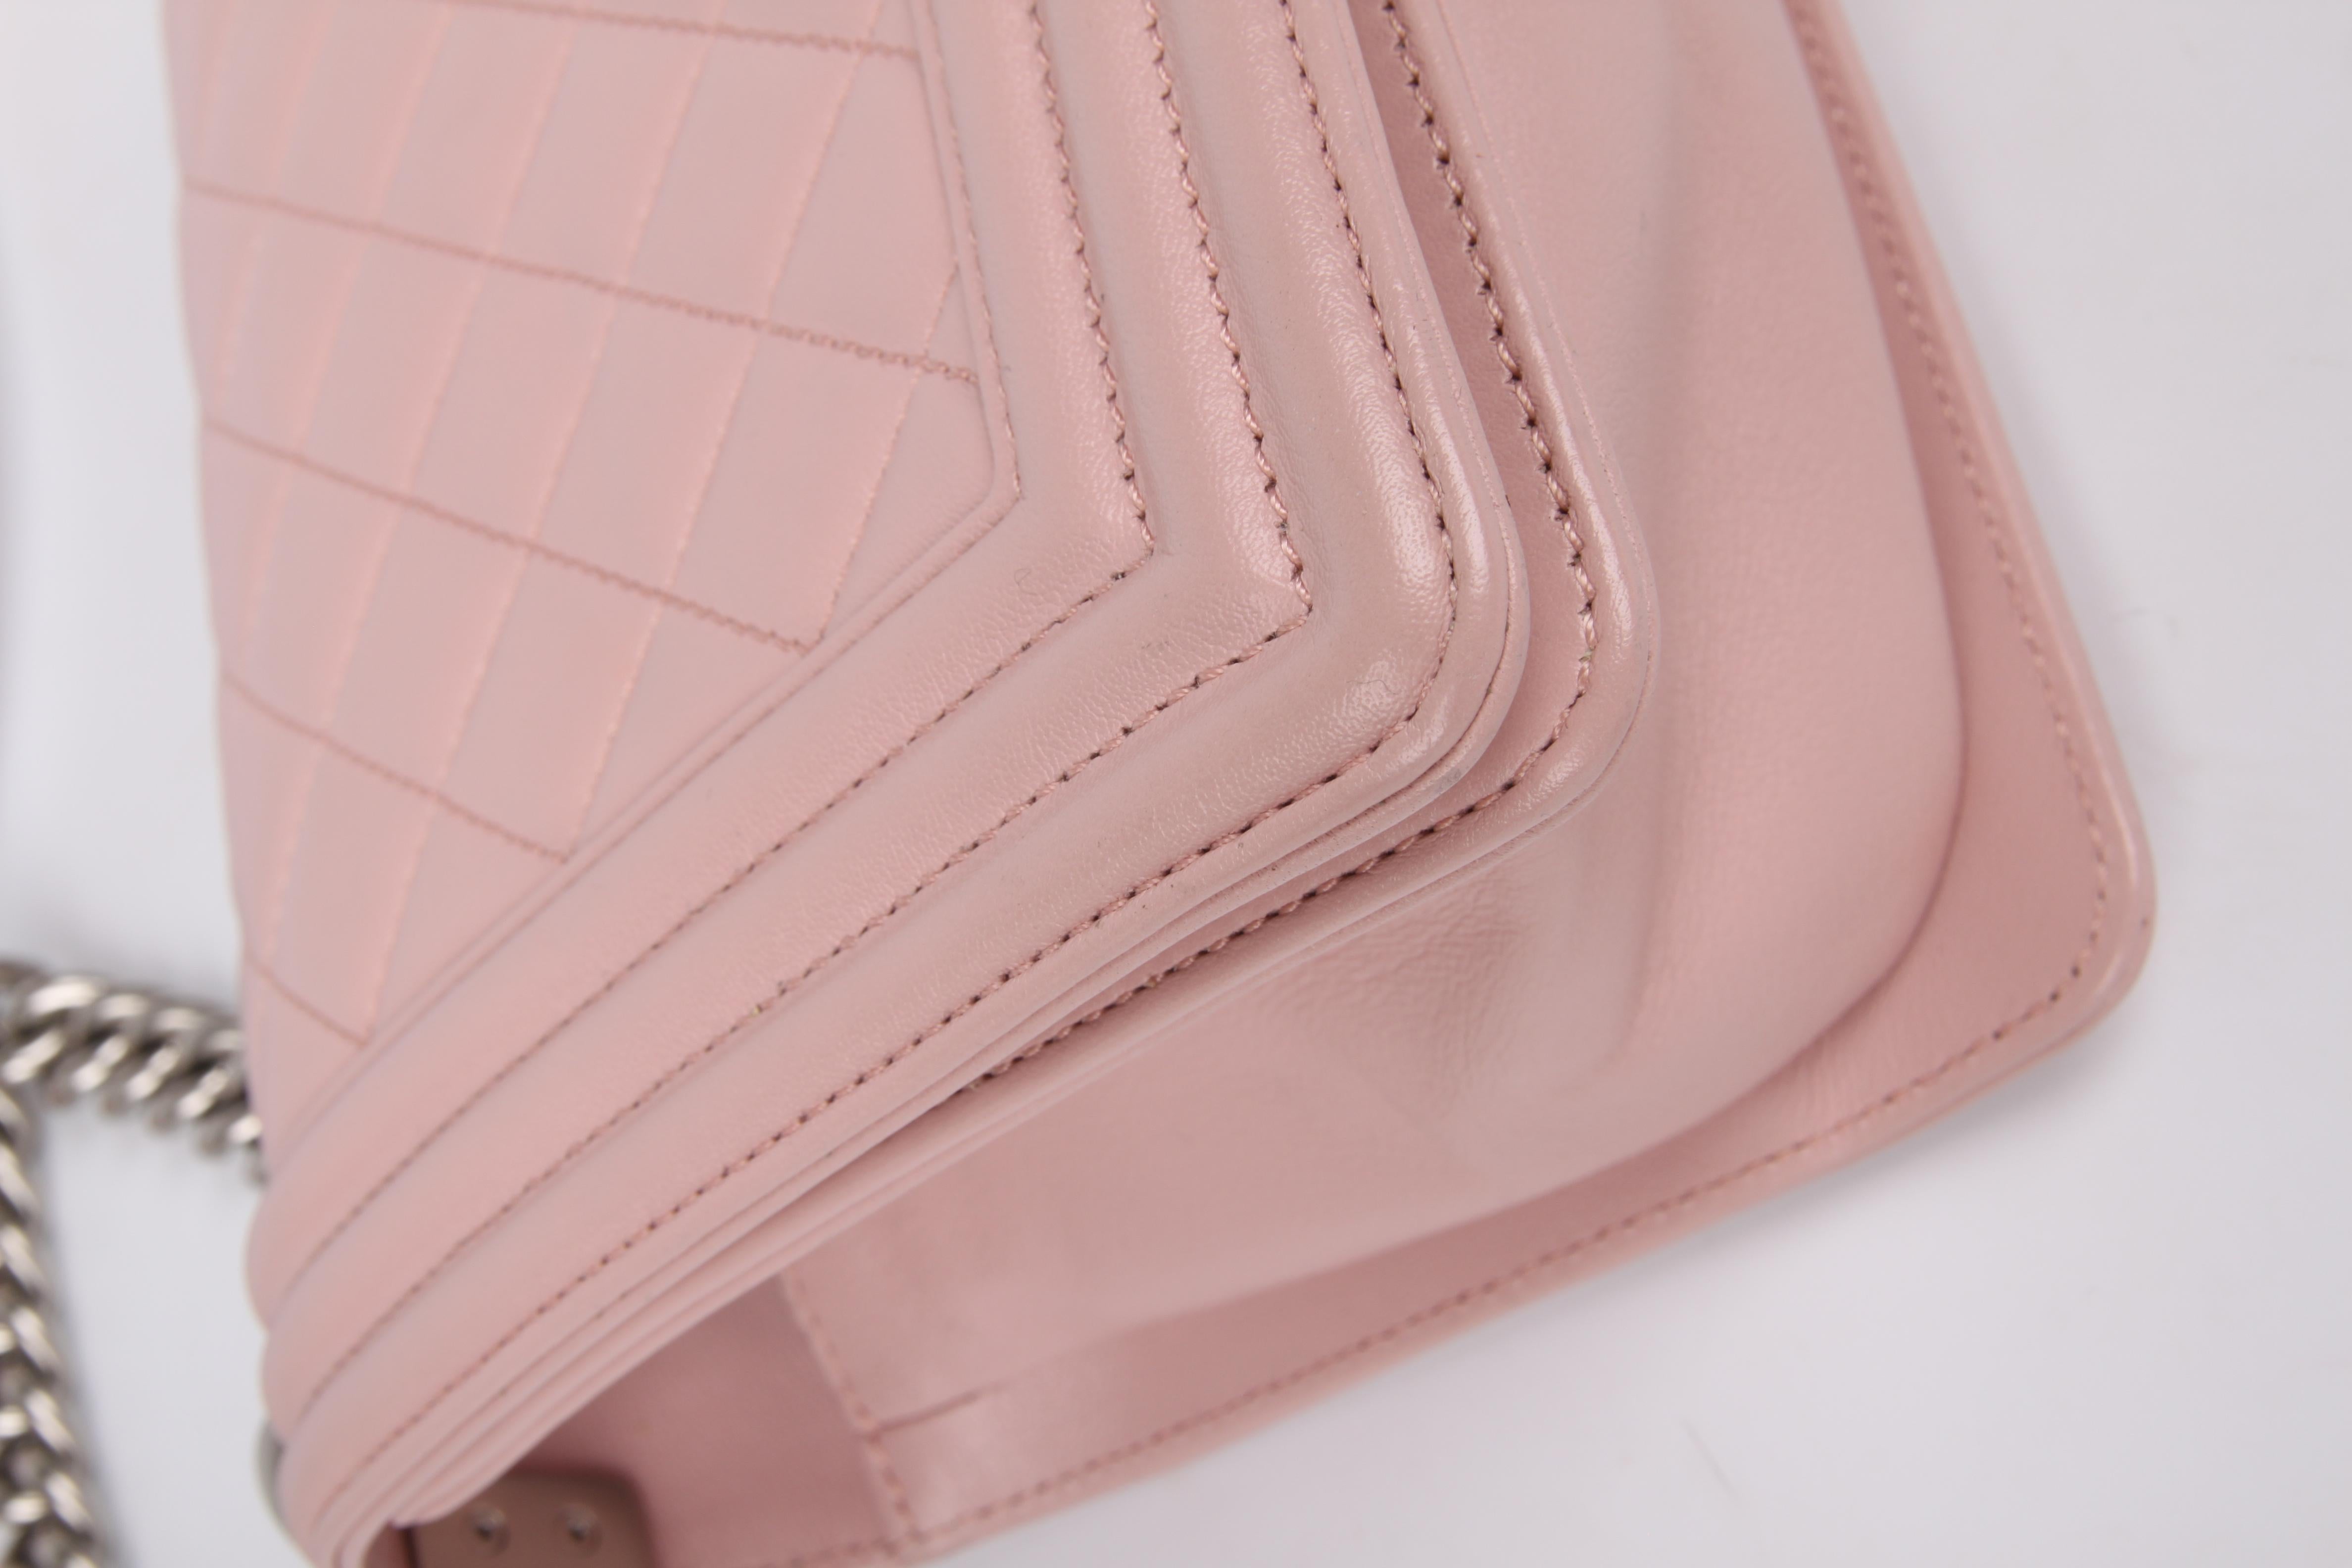 Beige Chanel Le Boy Bag Medium - dusty pale pink